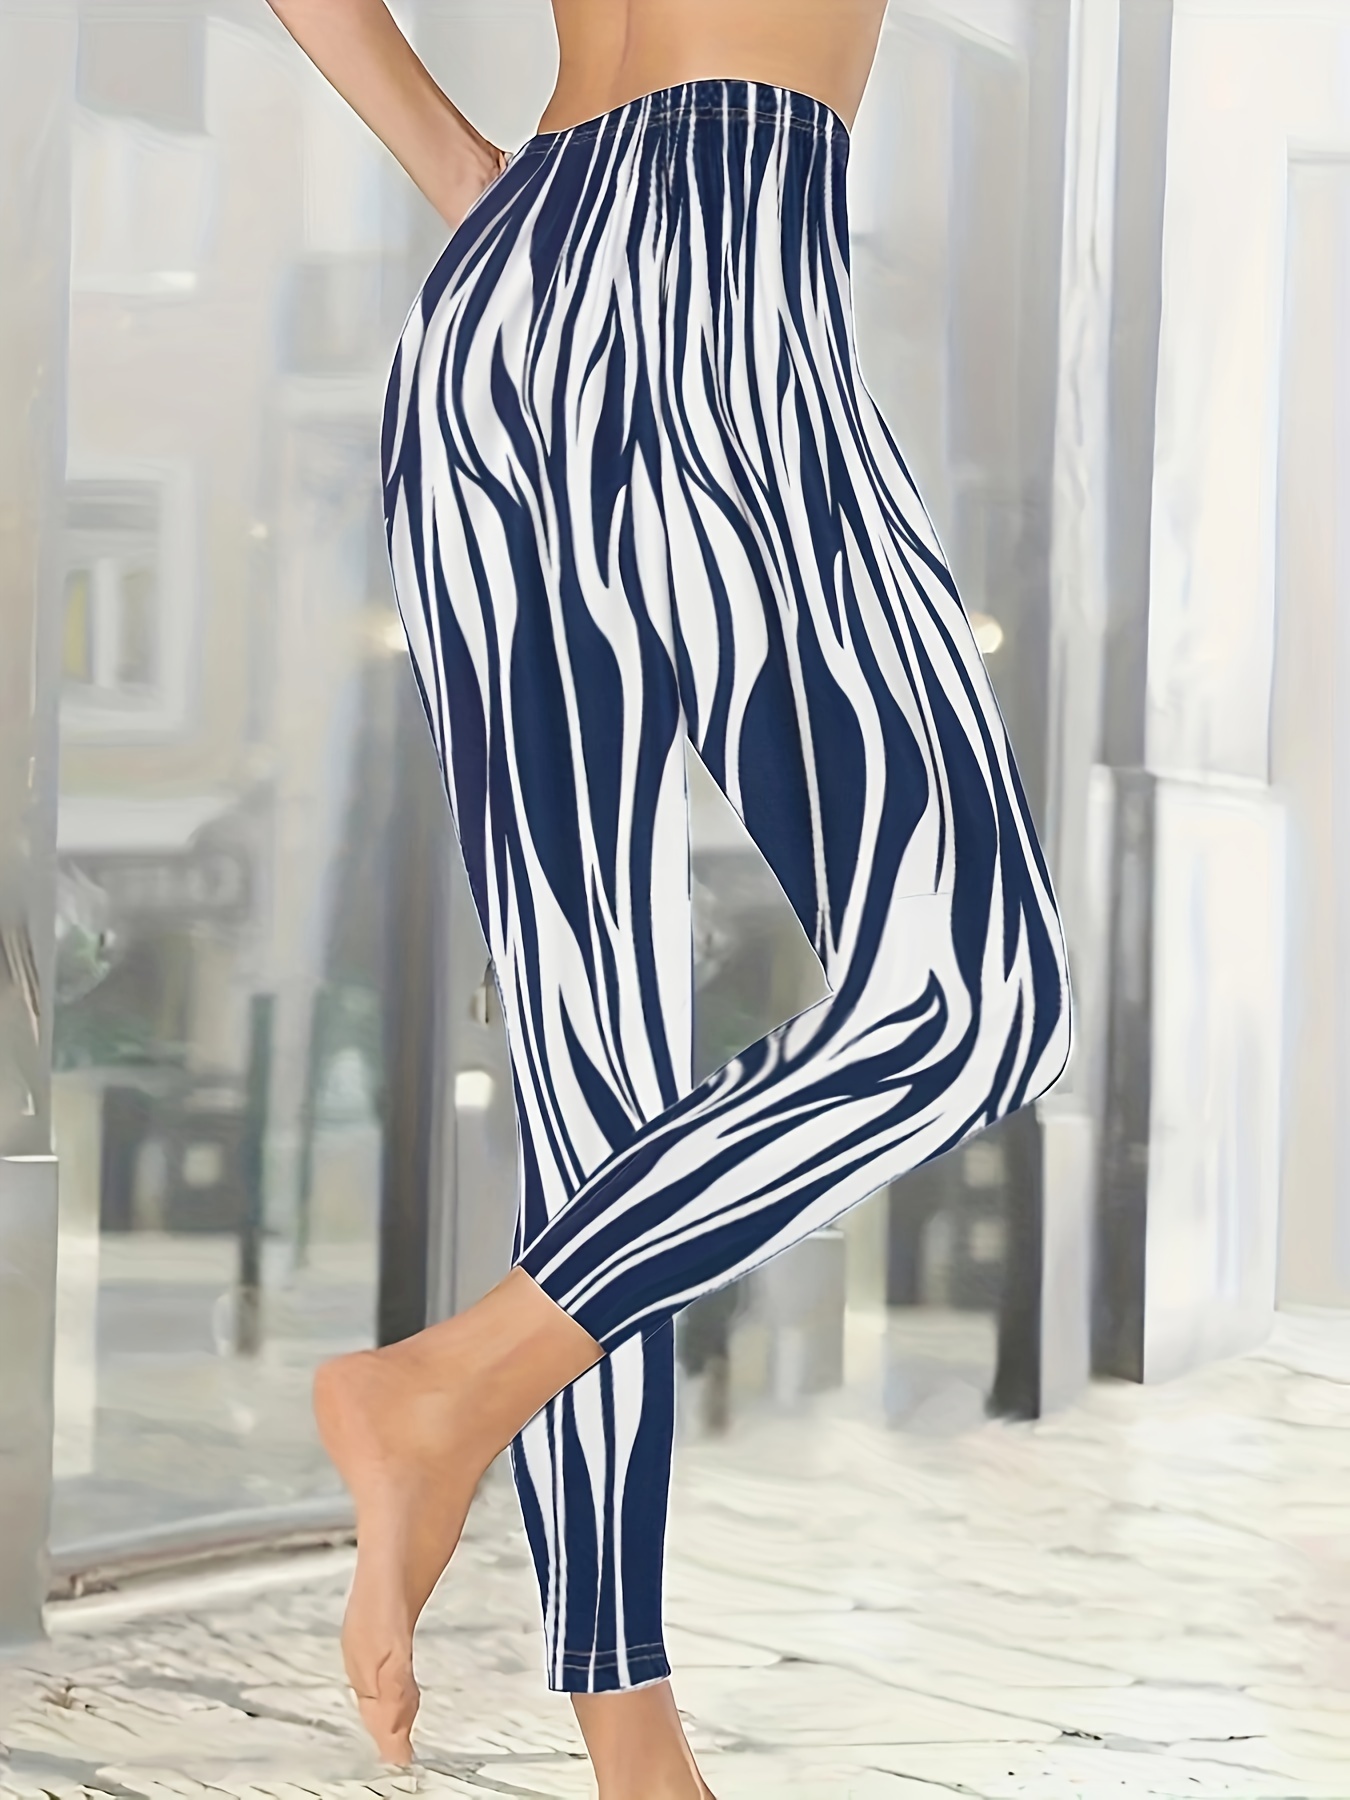 Dark blue sports legging with zebra print